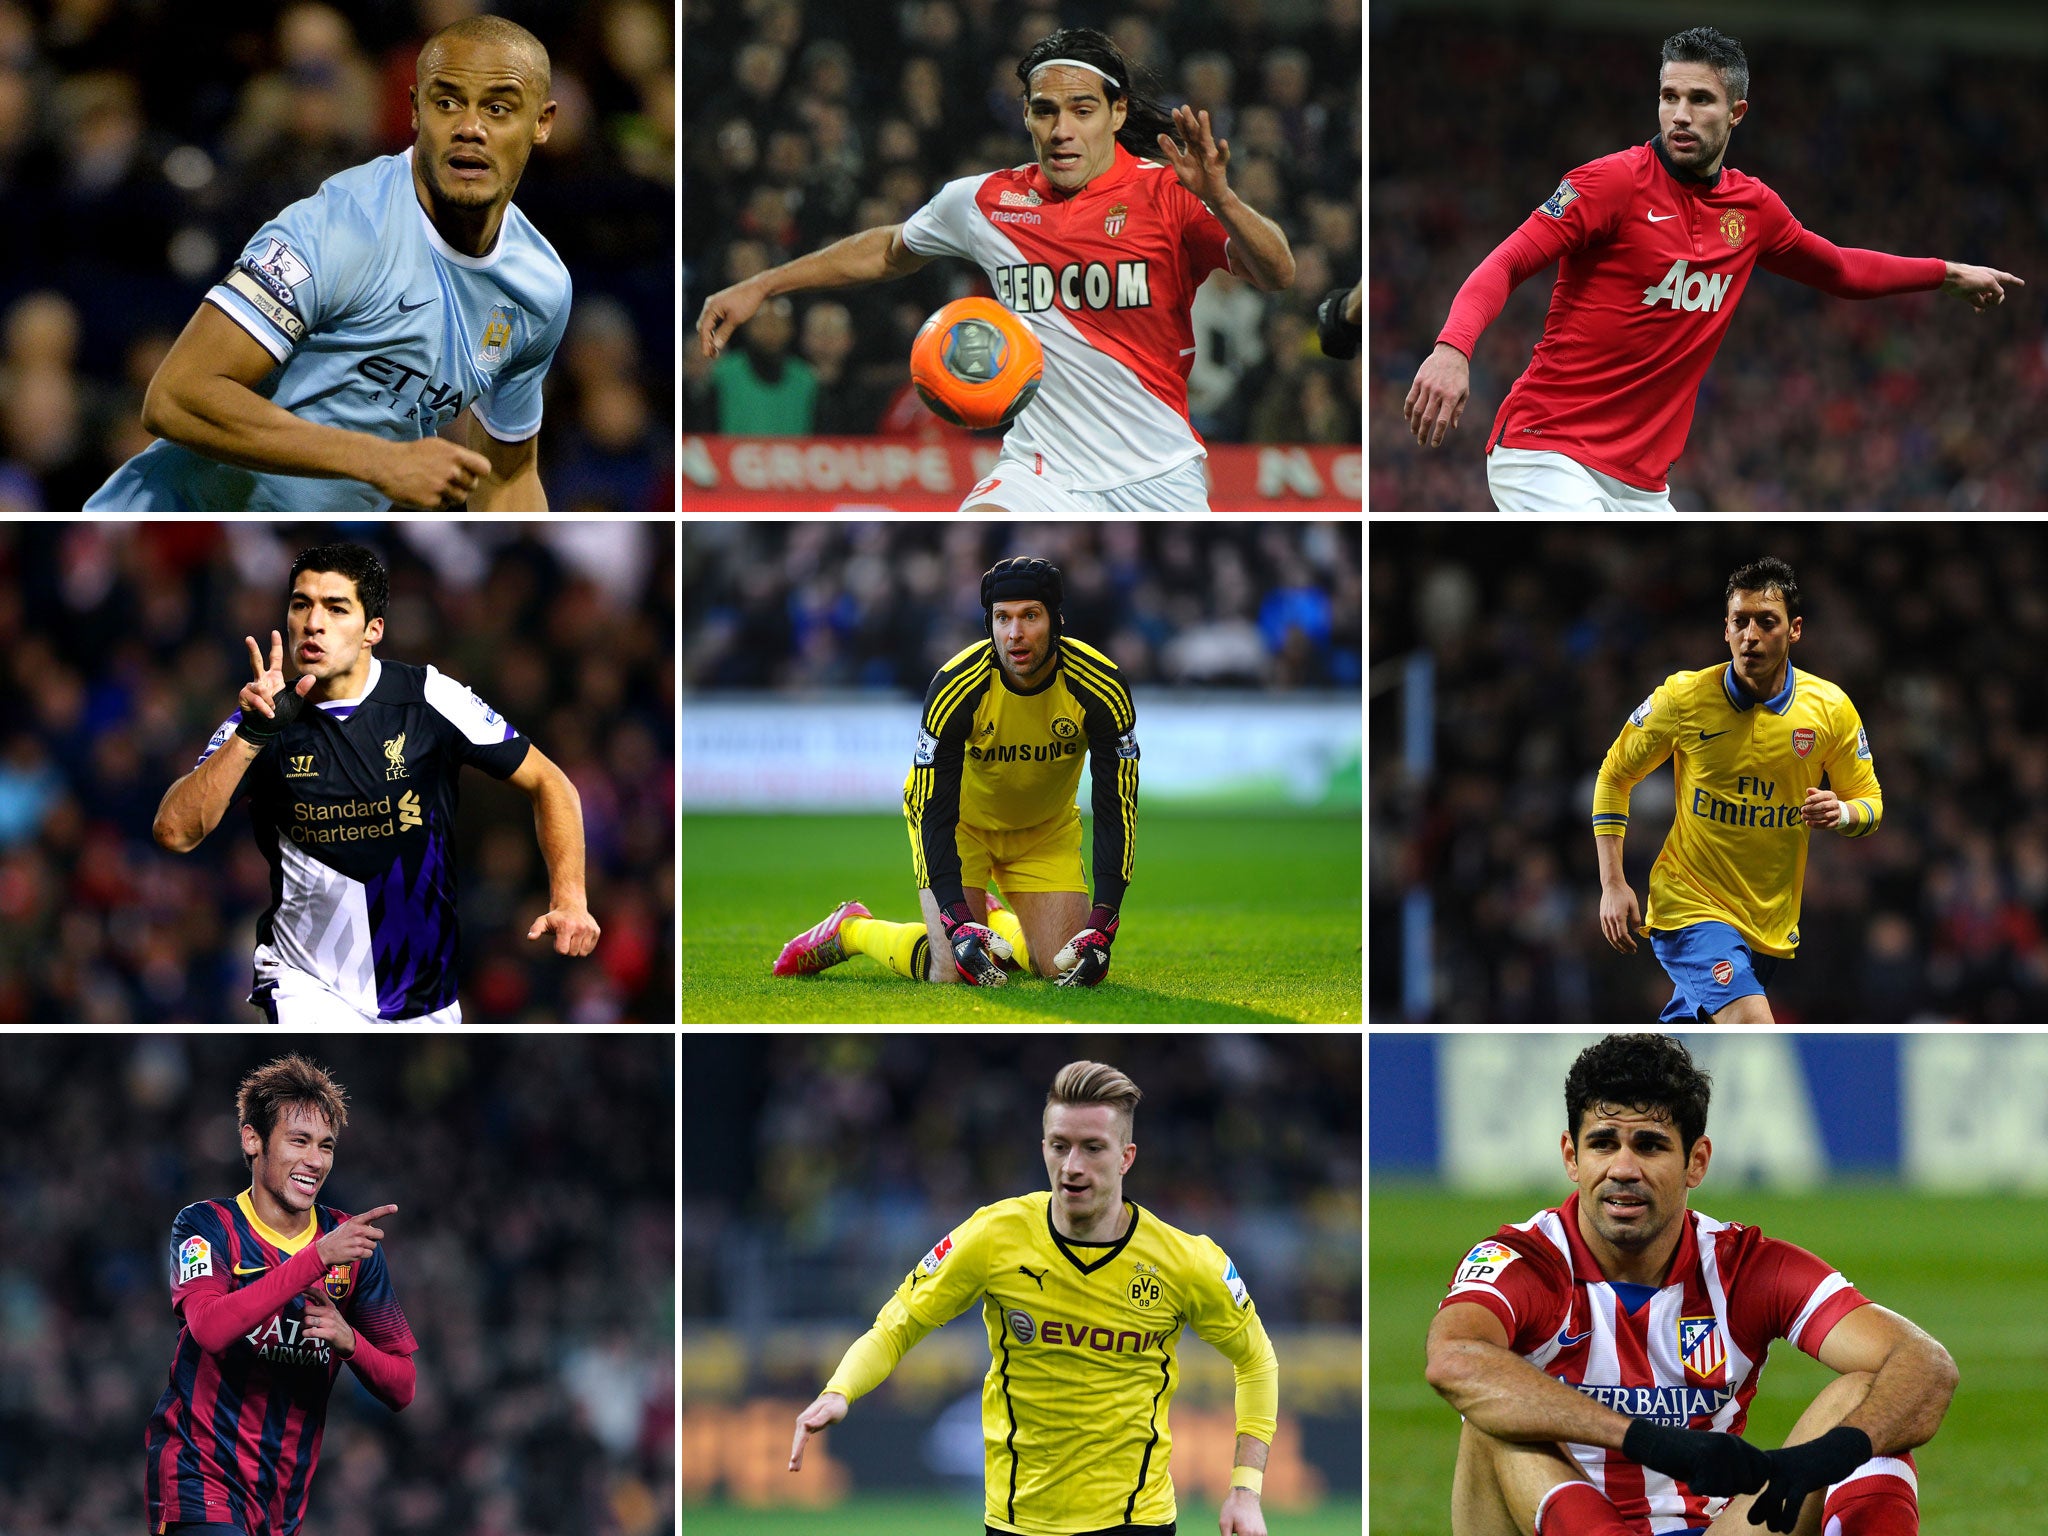 (Clockwise starting top-left) Vicent Kompany, Radamel Falcao, Robin van Persie, Mesut Ozil, Diego Costa, Marco Reus, Neymar, Luis Suarez and Peter Cech (centre)